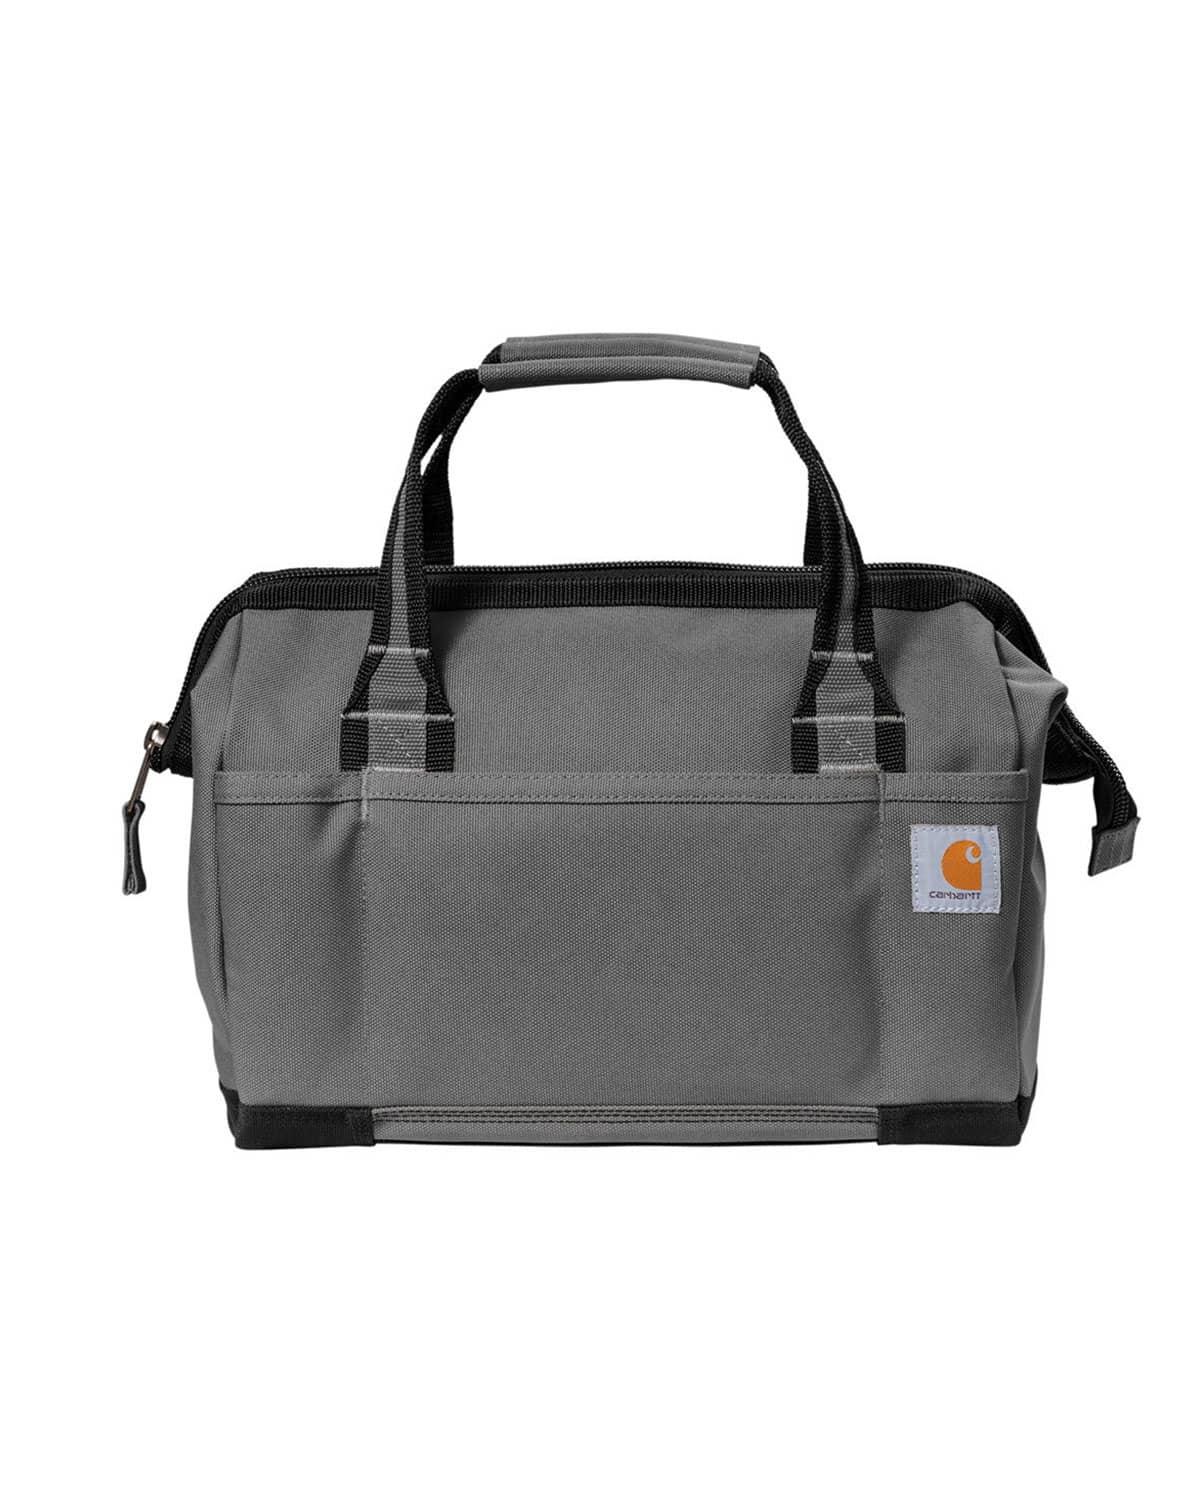 Carhartt CT89240105 Foundry Series 14 Tool Bag